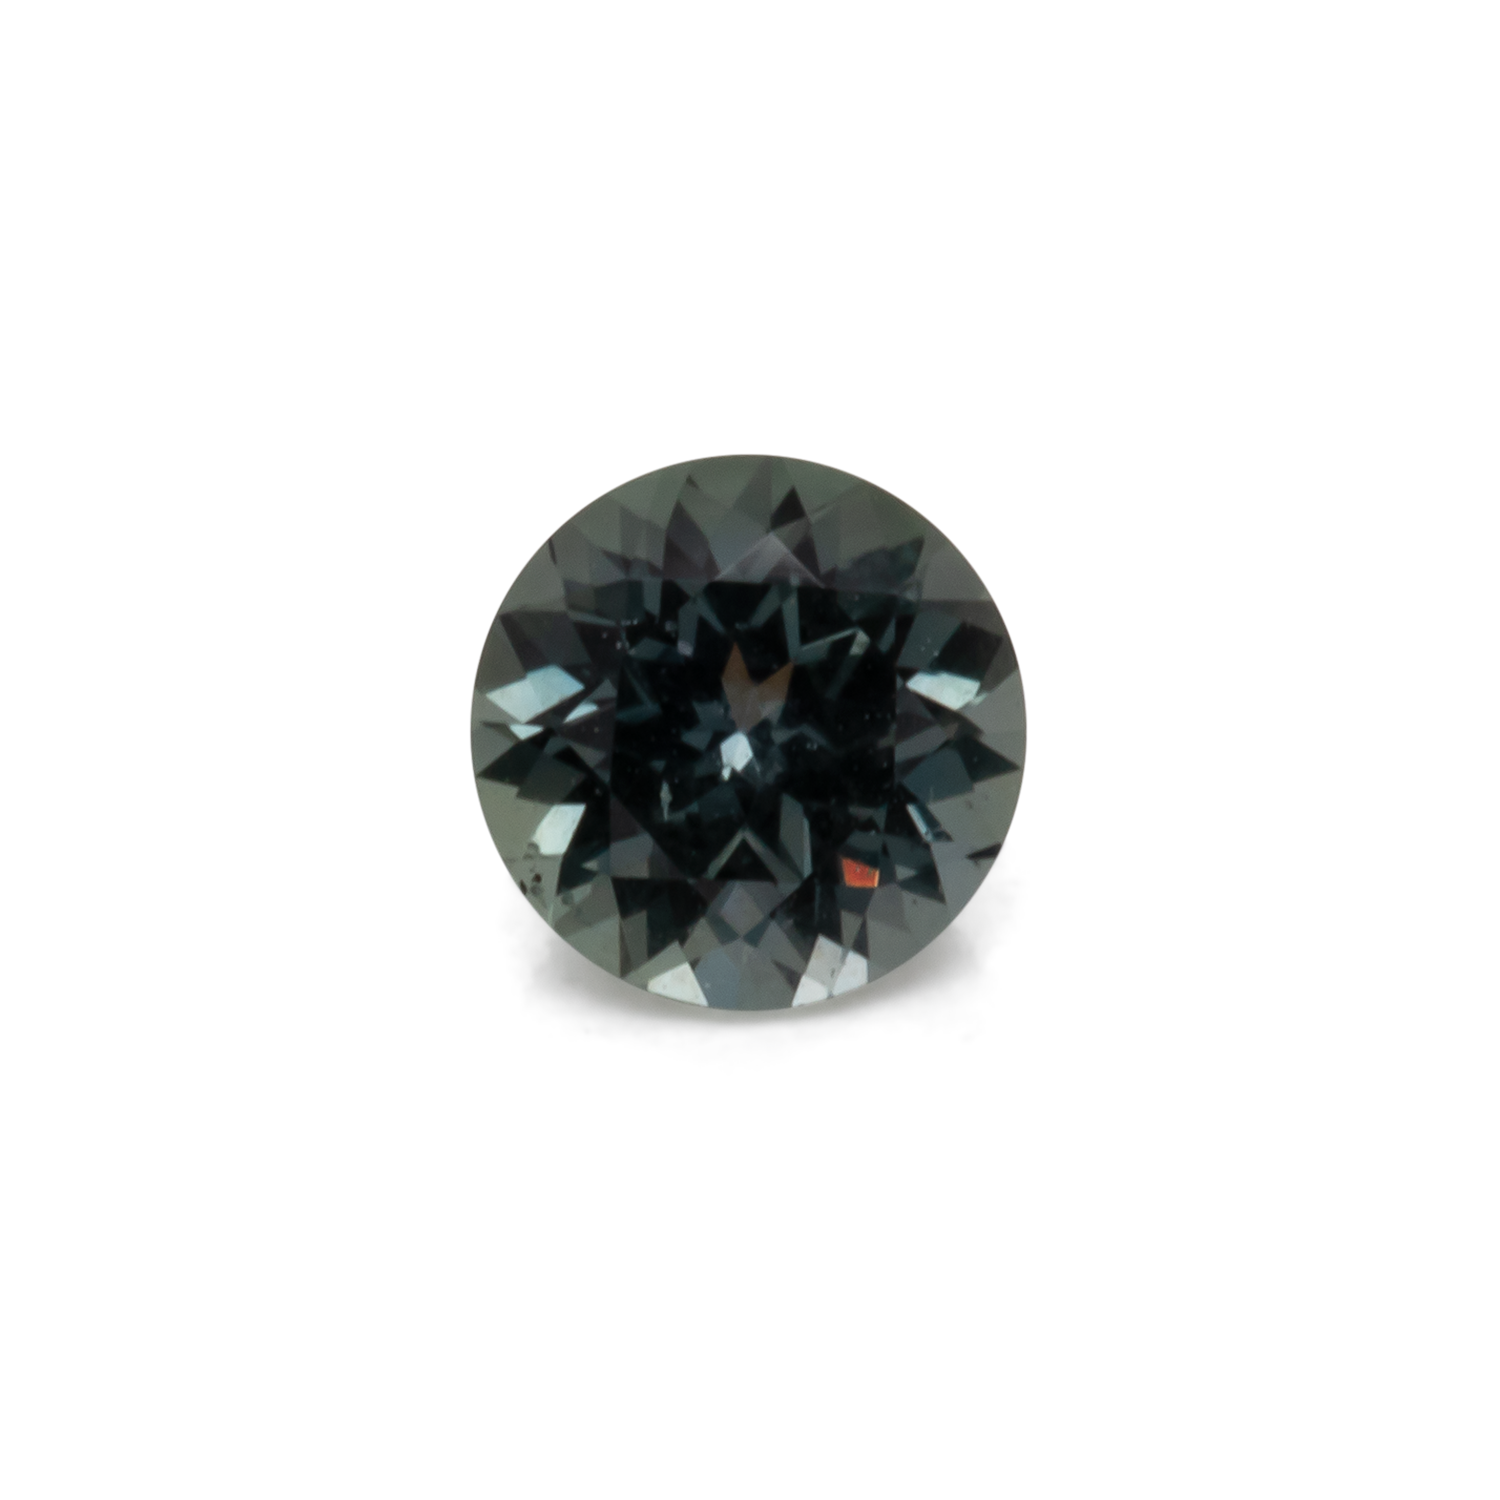 Sapphire - blue/grey, round, 4.8x4.8 mm, 0.50 cts, No. XSR11185